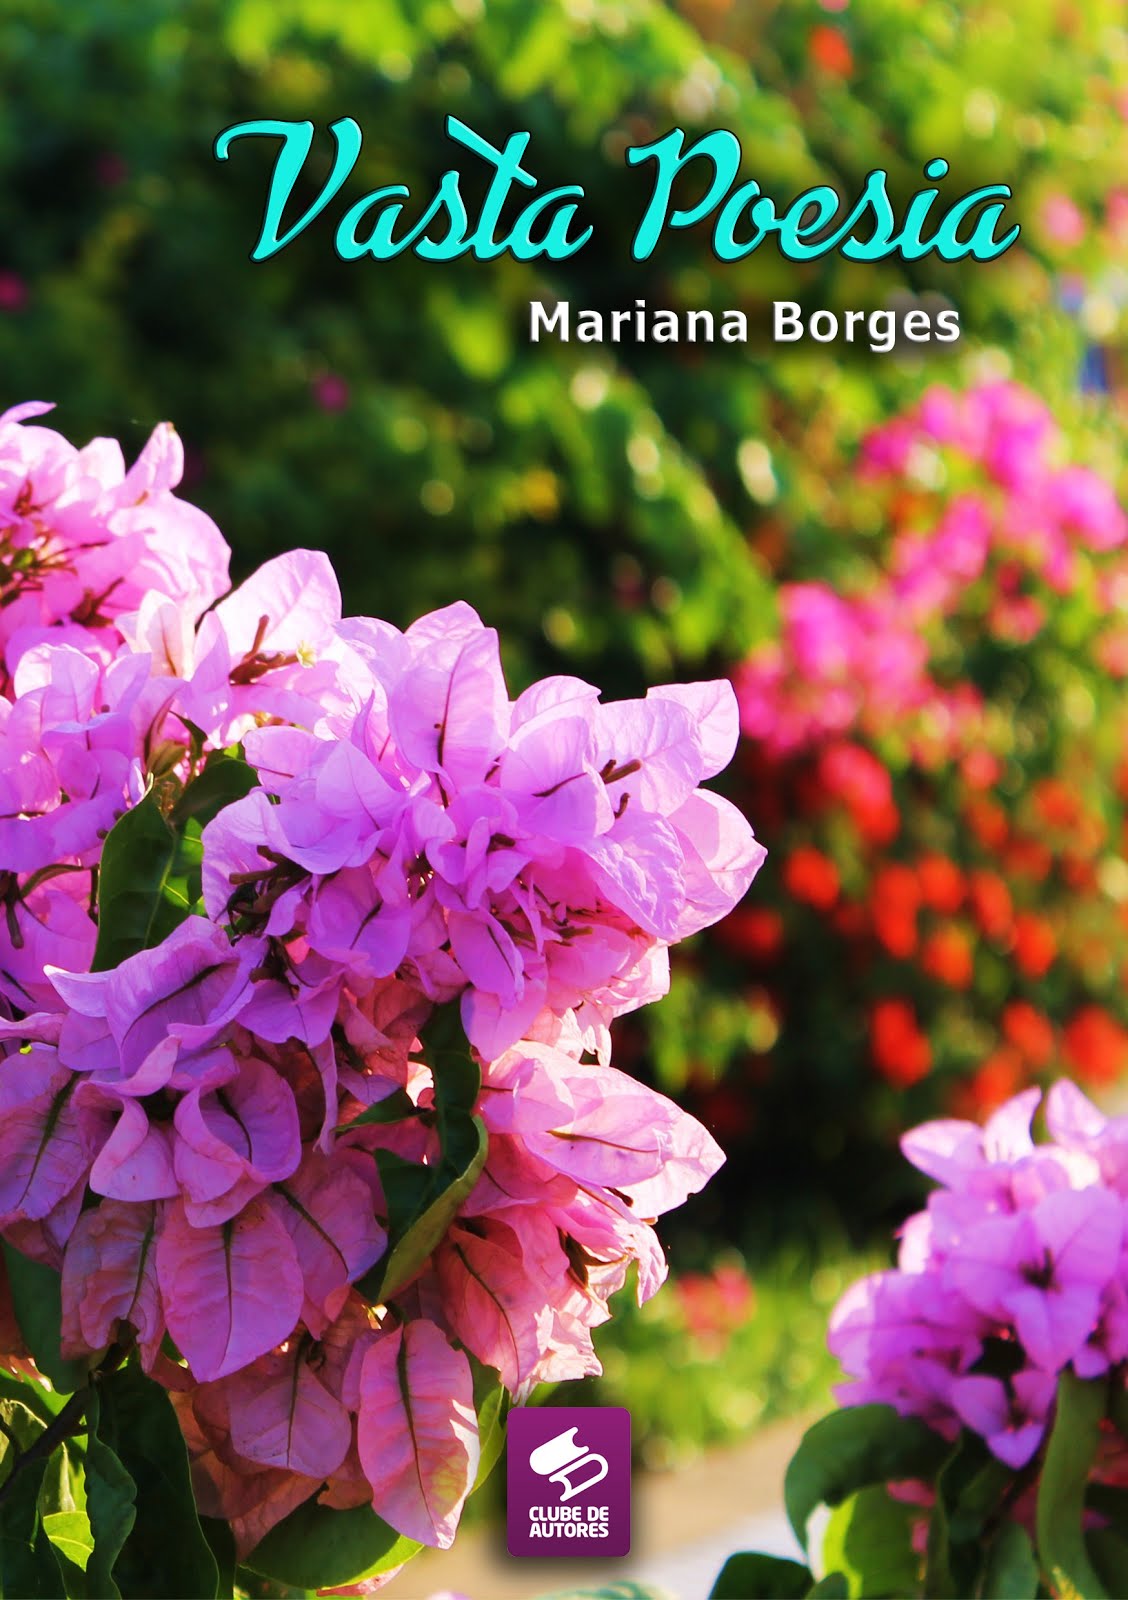 Livro de Poesias Vasta Poesia (2018) Mariana Borges